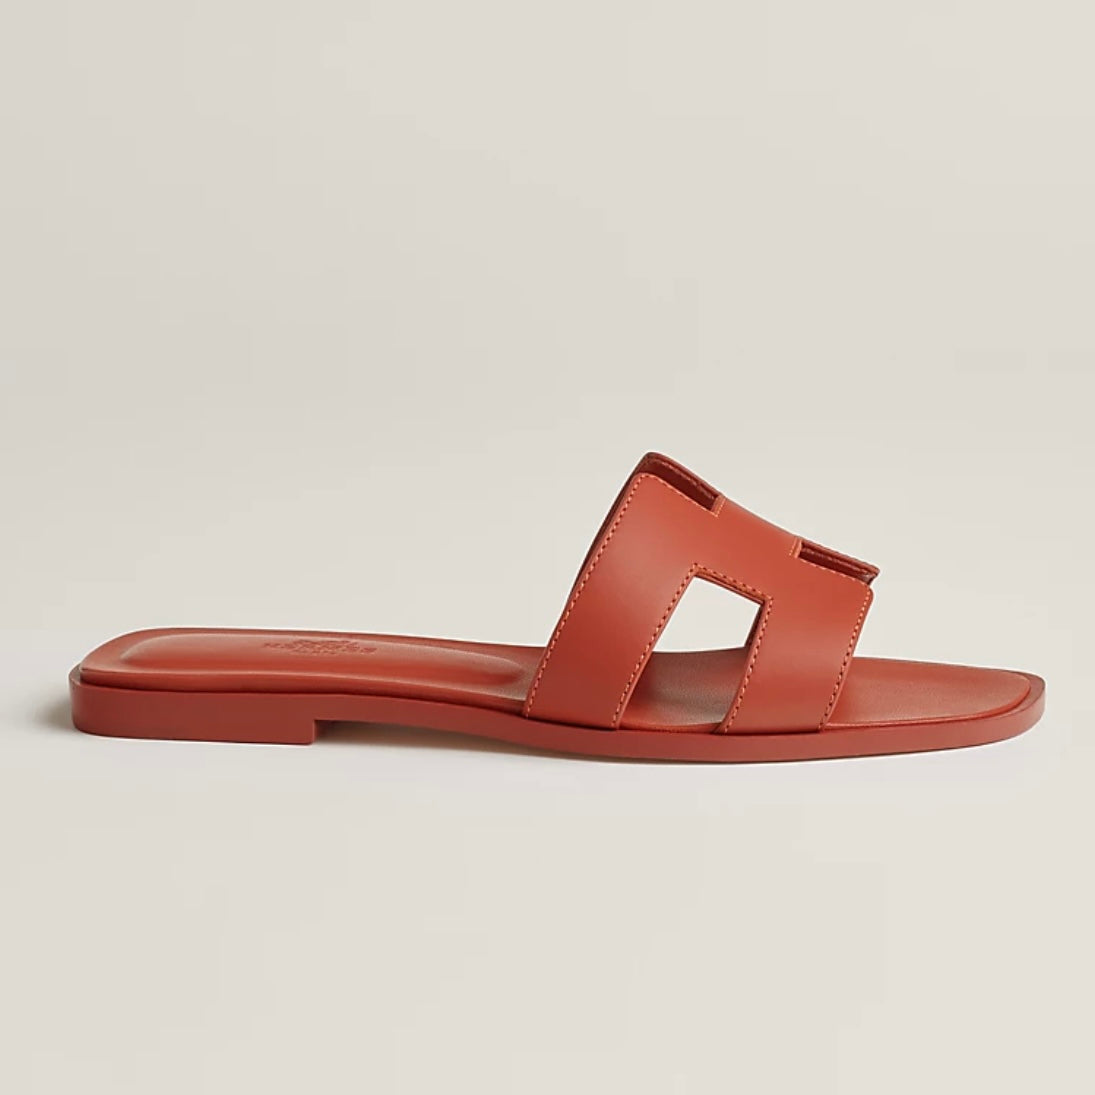 Hong Kong Stock - Hermes Oran Sandal (rouge de turin/Size 37.5)